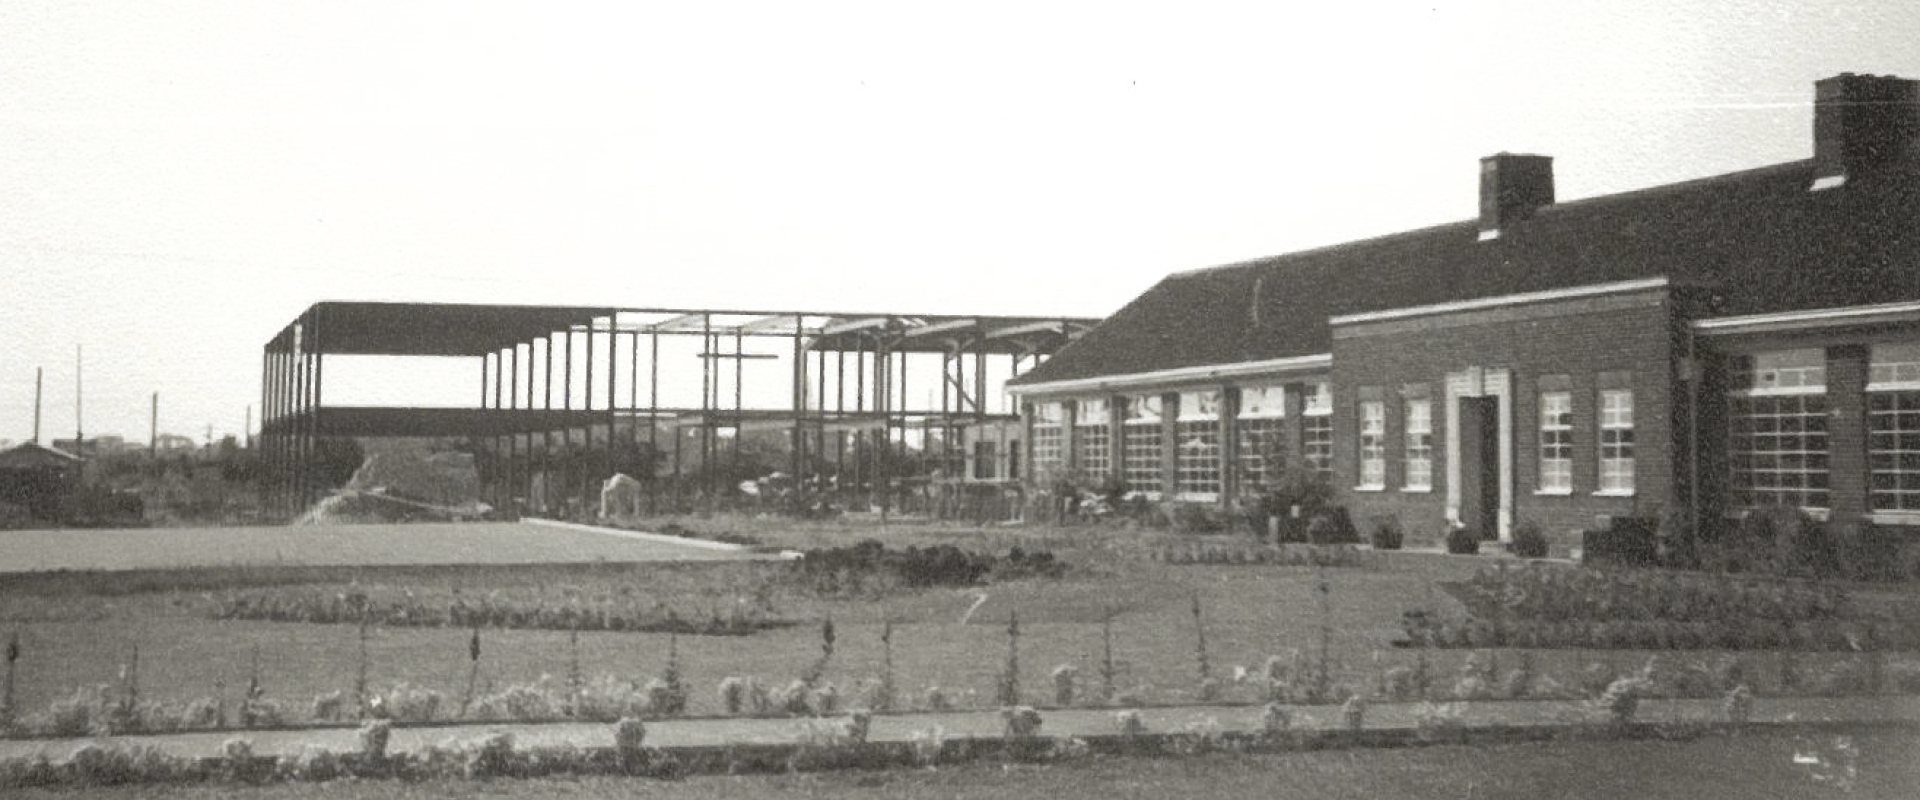 Thomas Mills High School History in 1960